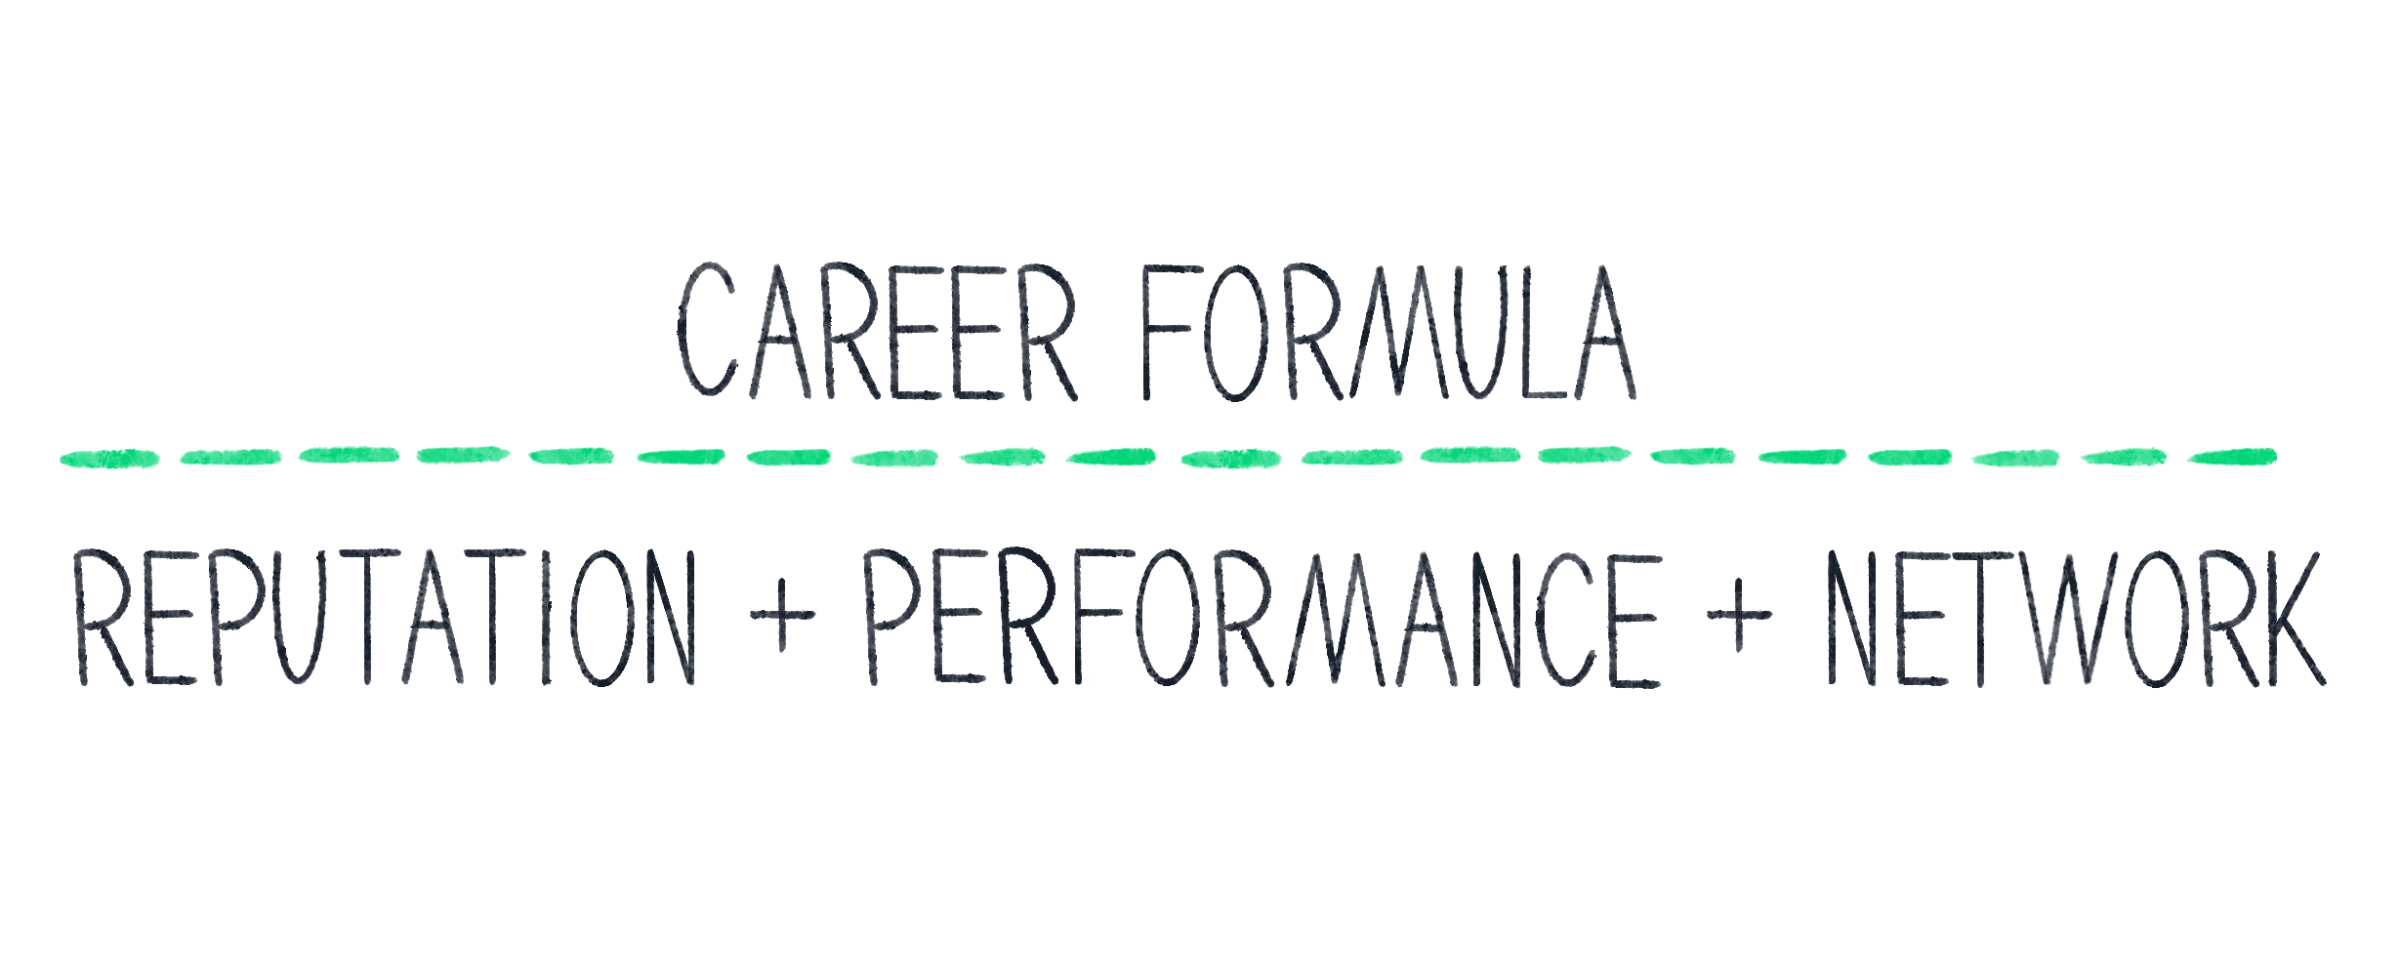 Career Advancement Formula = Reputation x Performance x Network